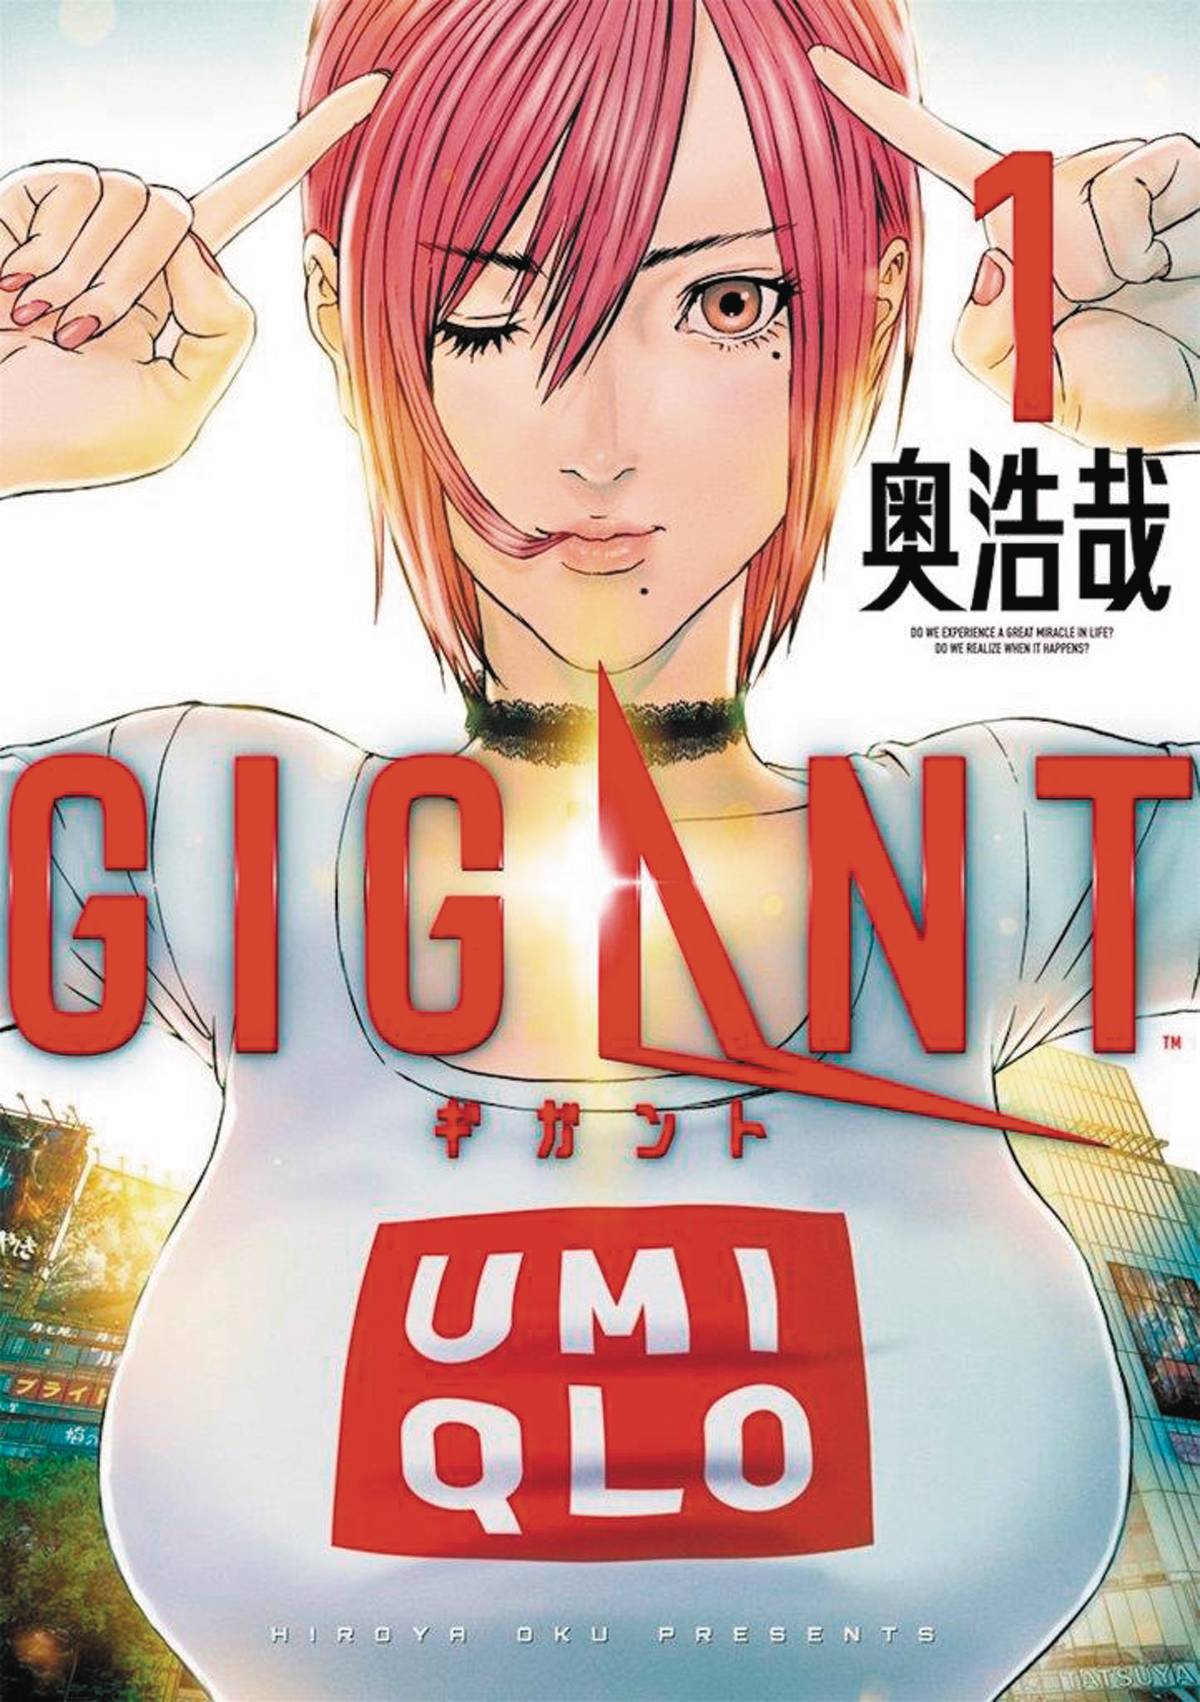 Gigant Manga Volume 1 (Mature)